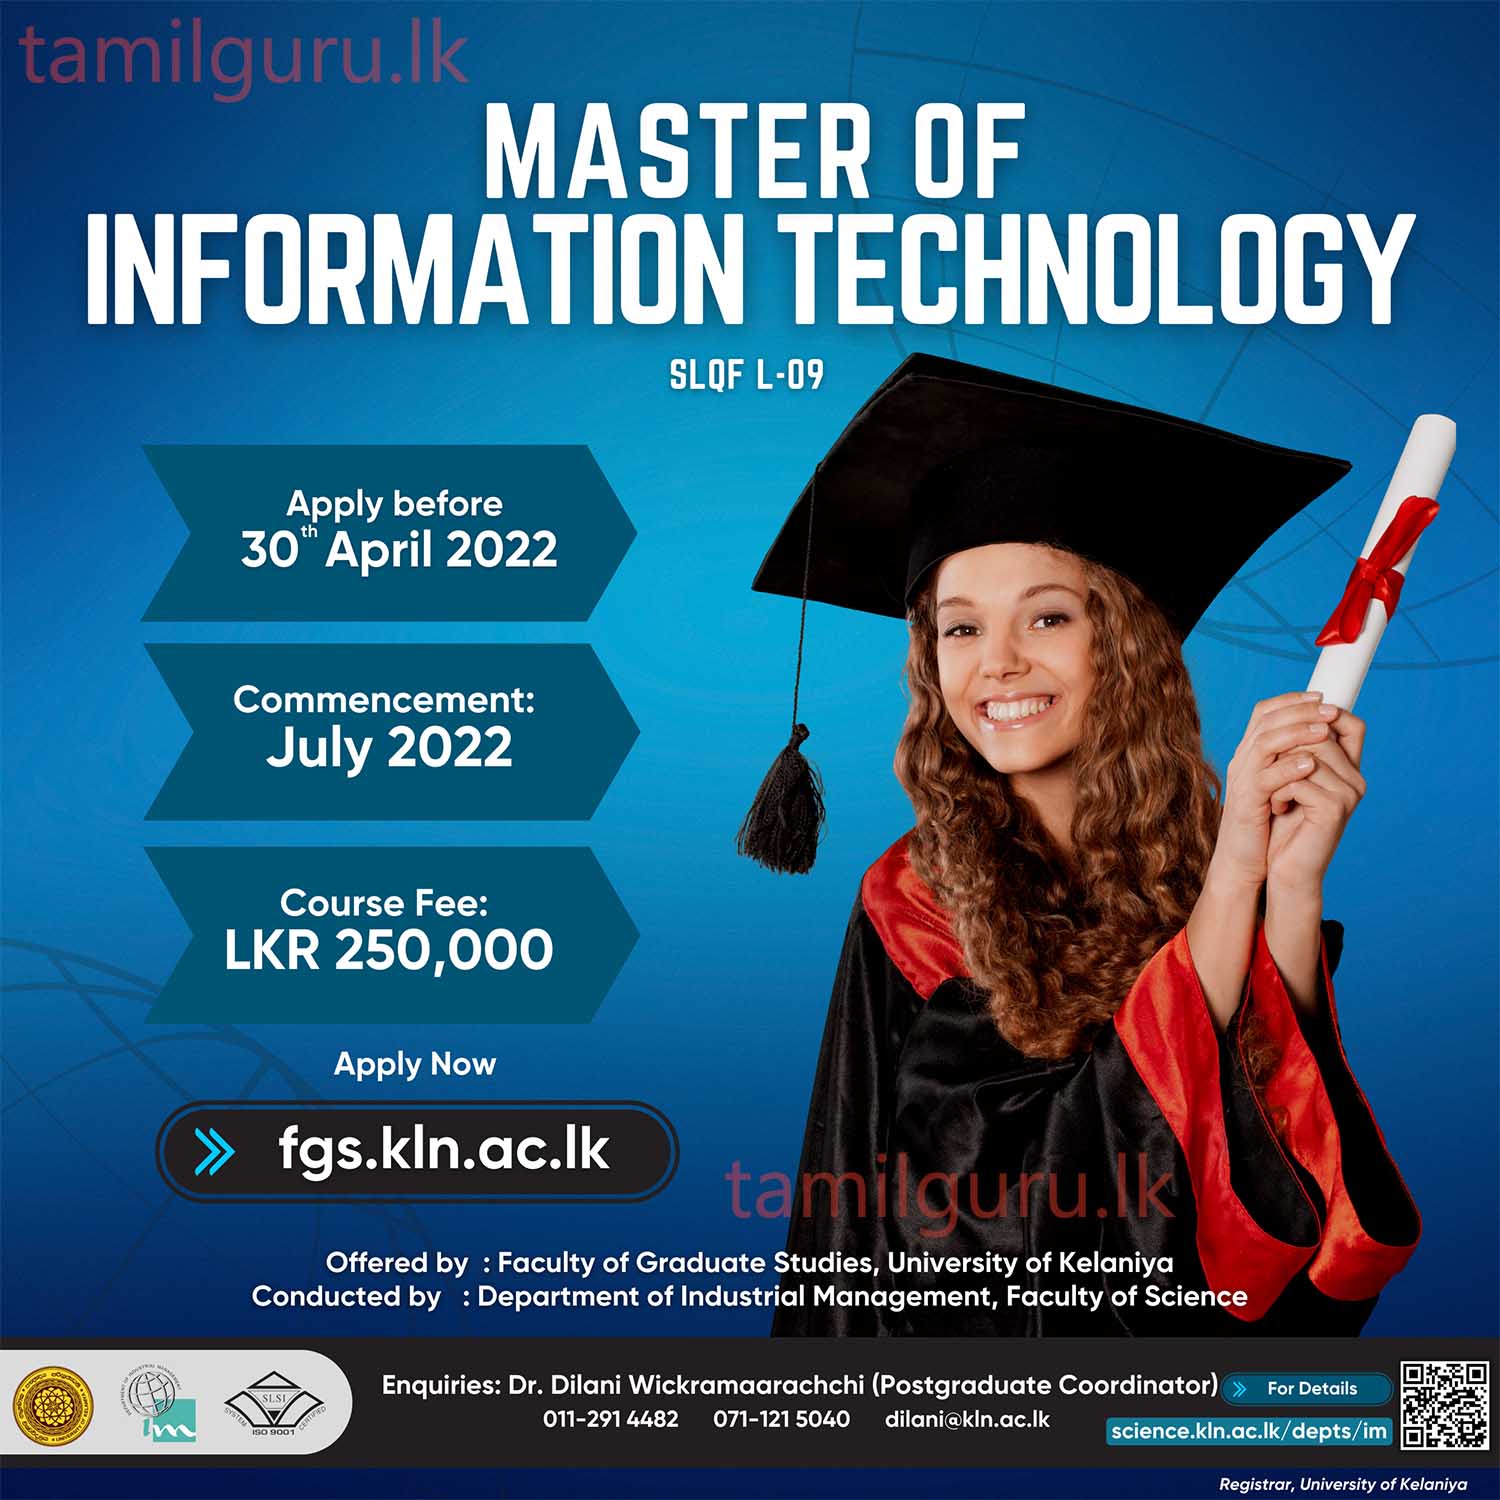 Master of Information Technology (IT) Programme (2022) Conducted by the University of Kelaniya